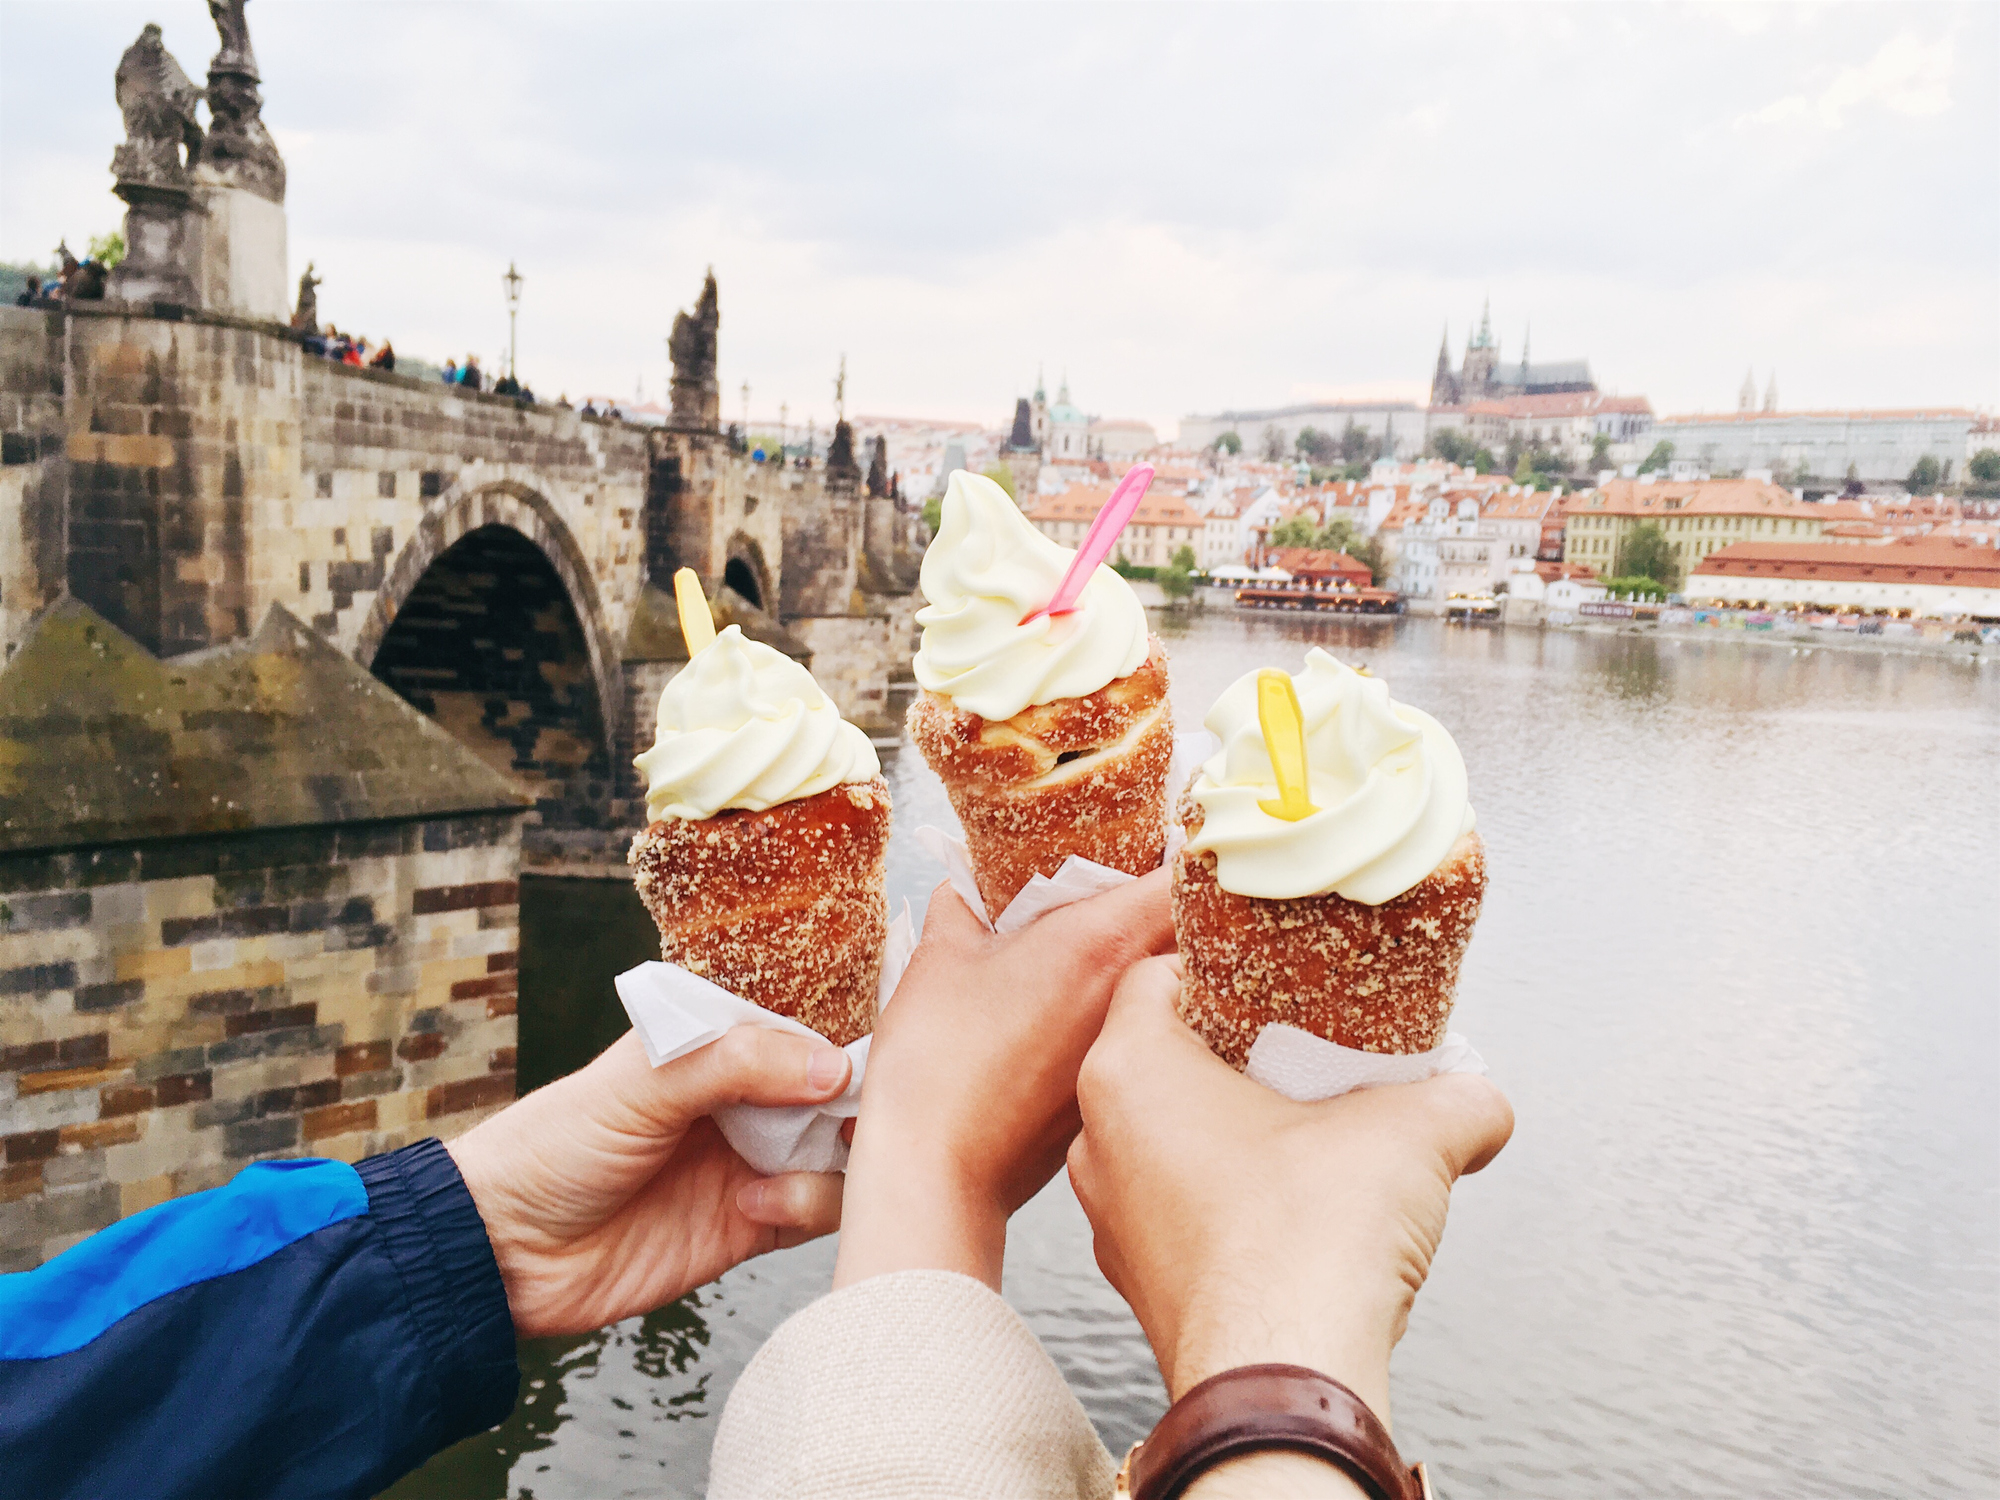 Three hands holding ice cream cones in front of a historic bridge